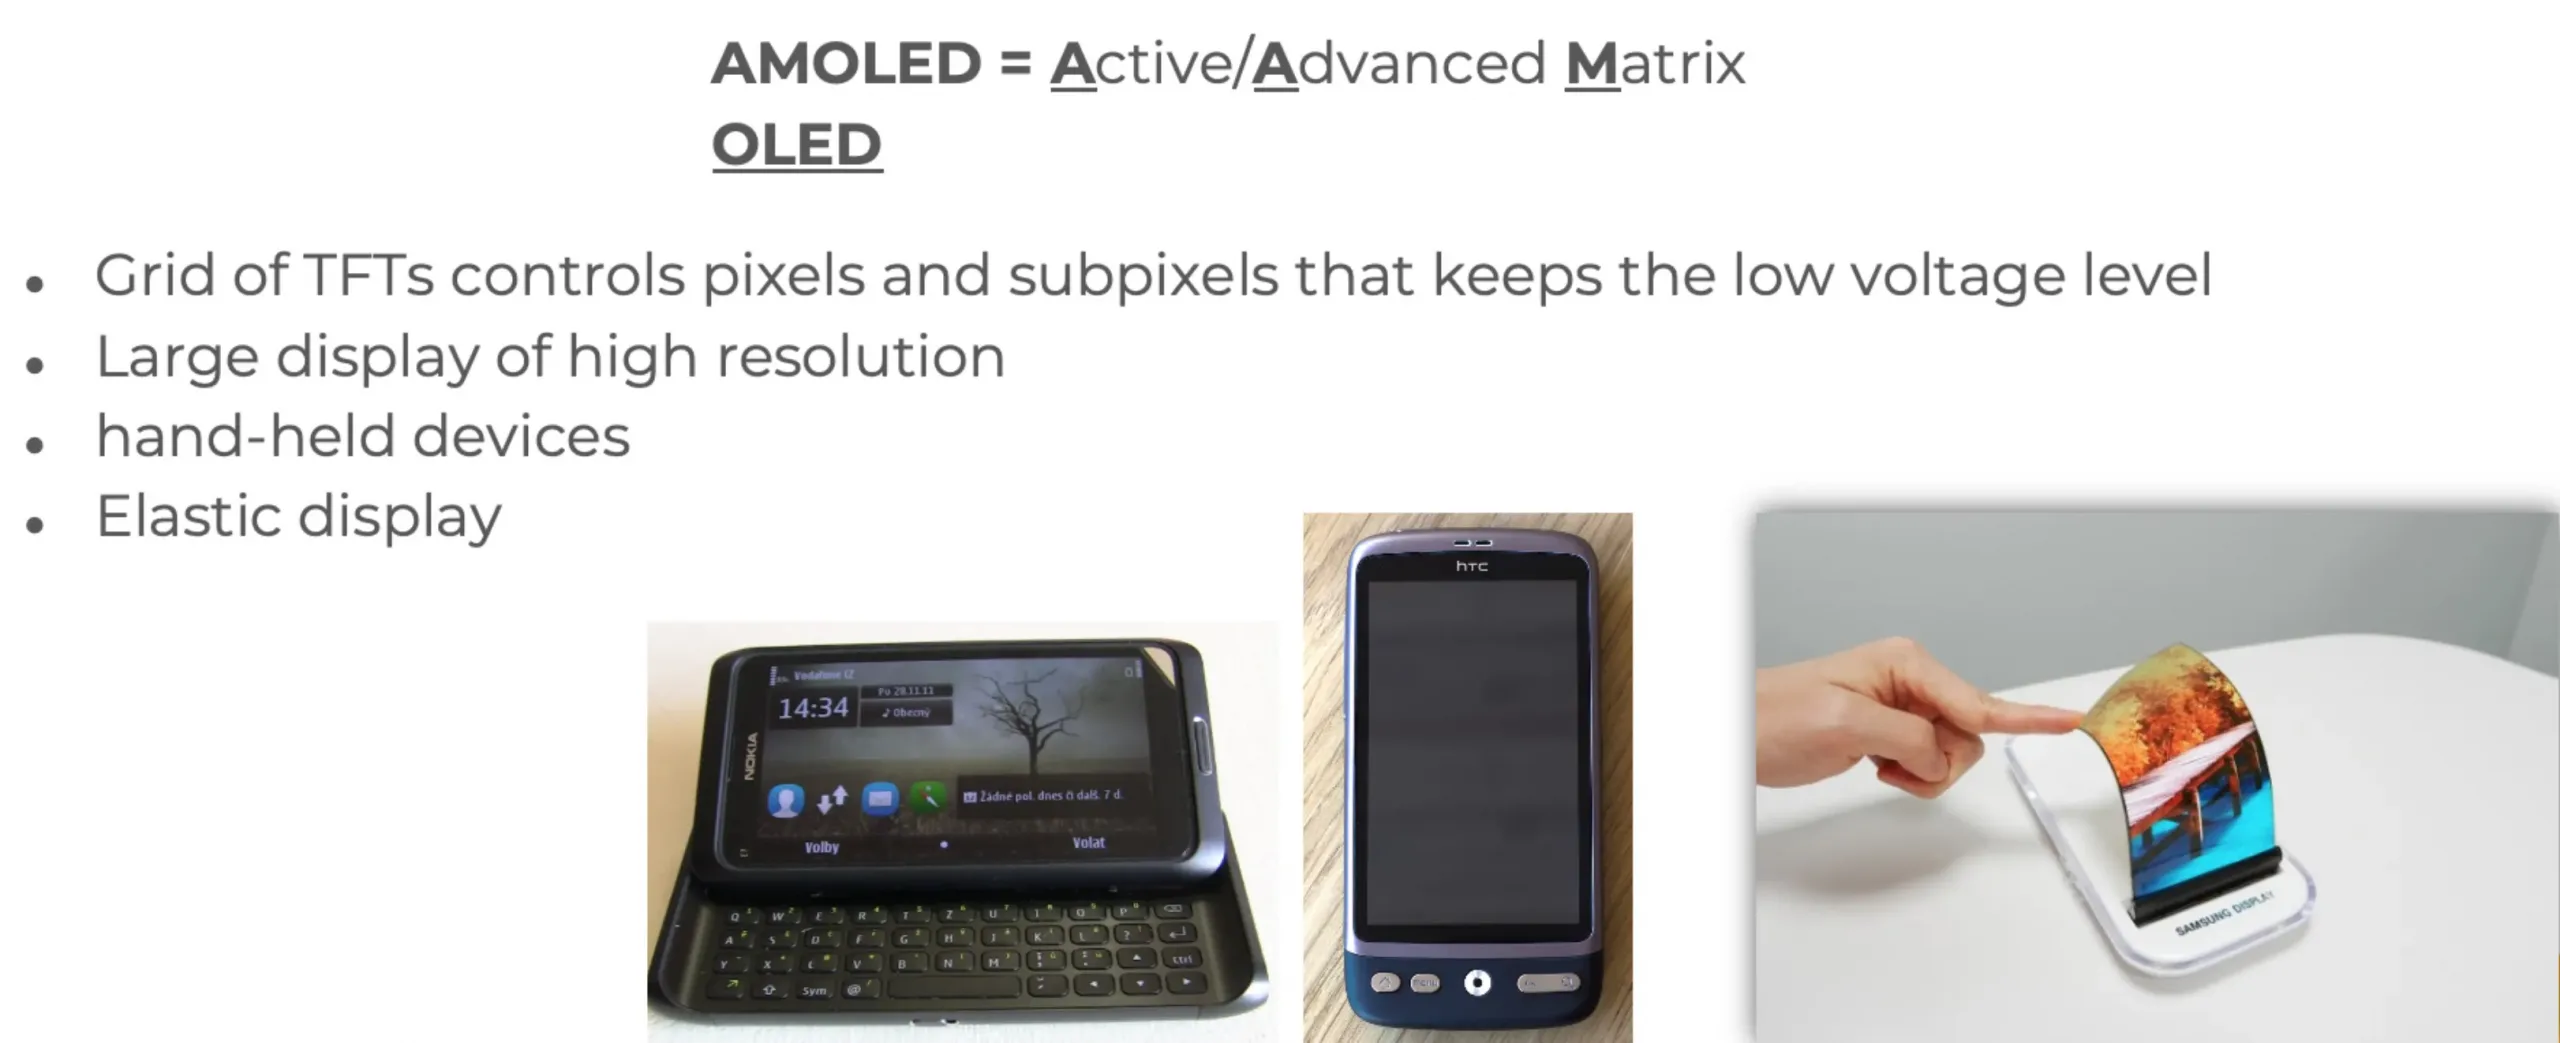 AMOLED – Active Matrix OLED displays